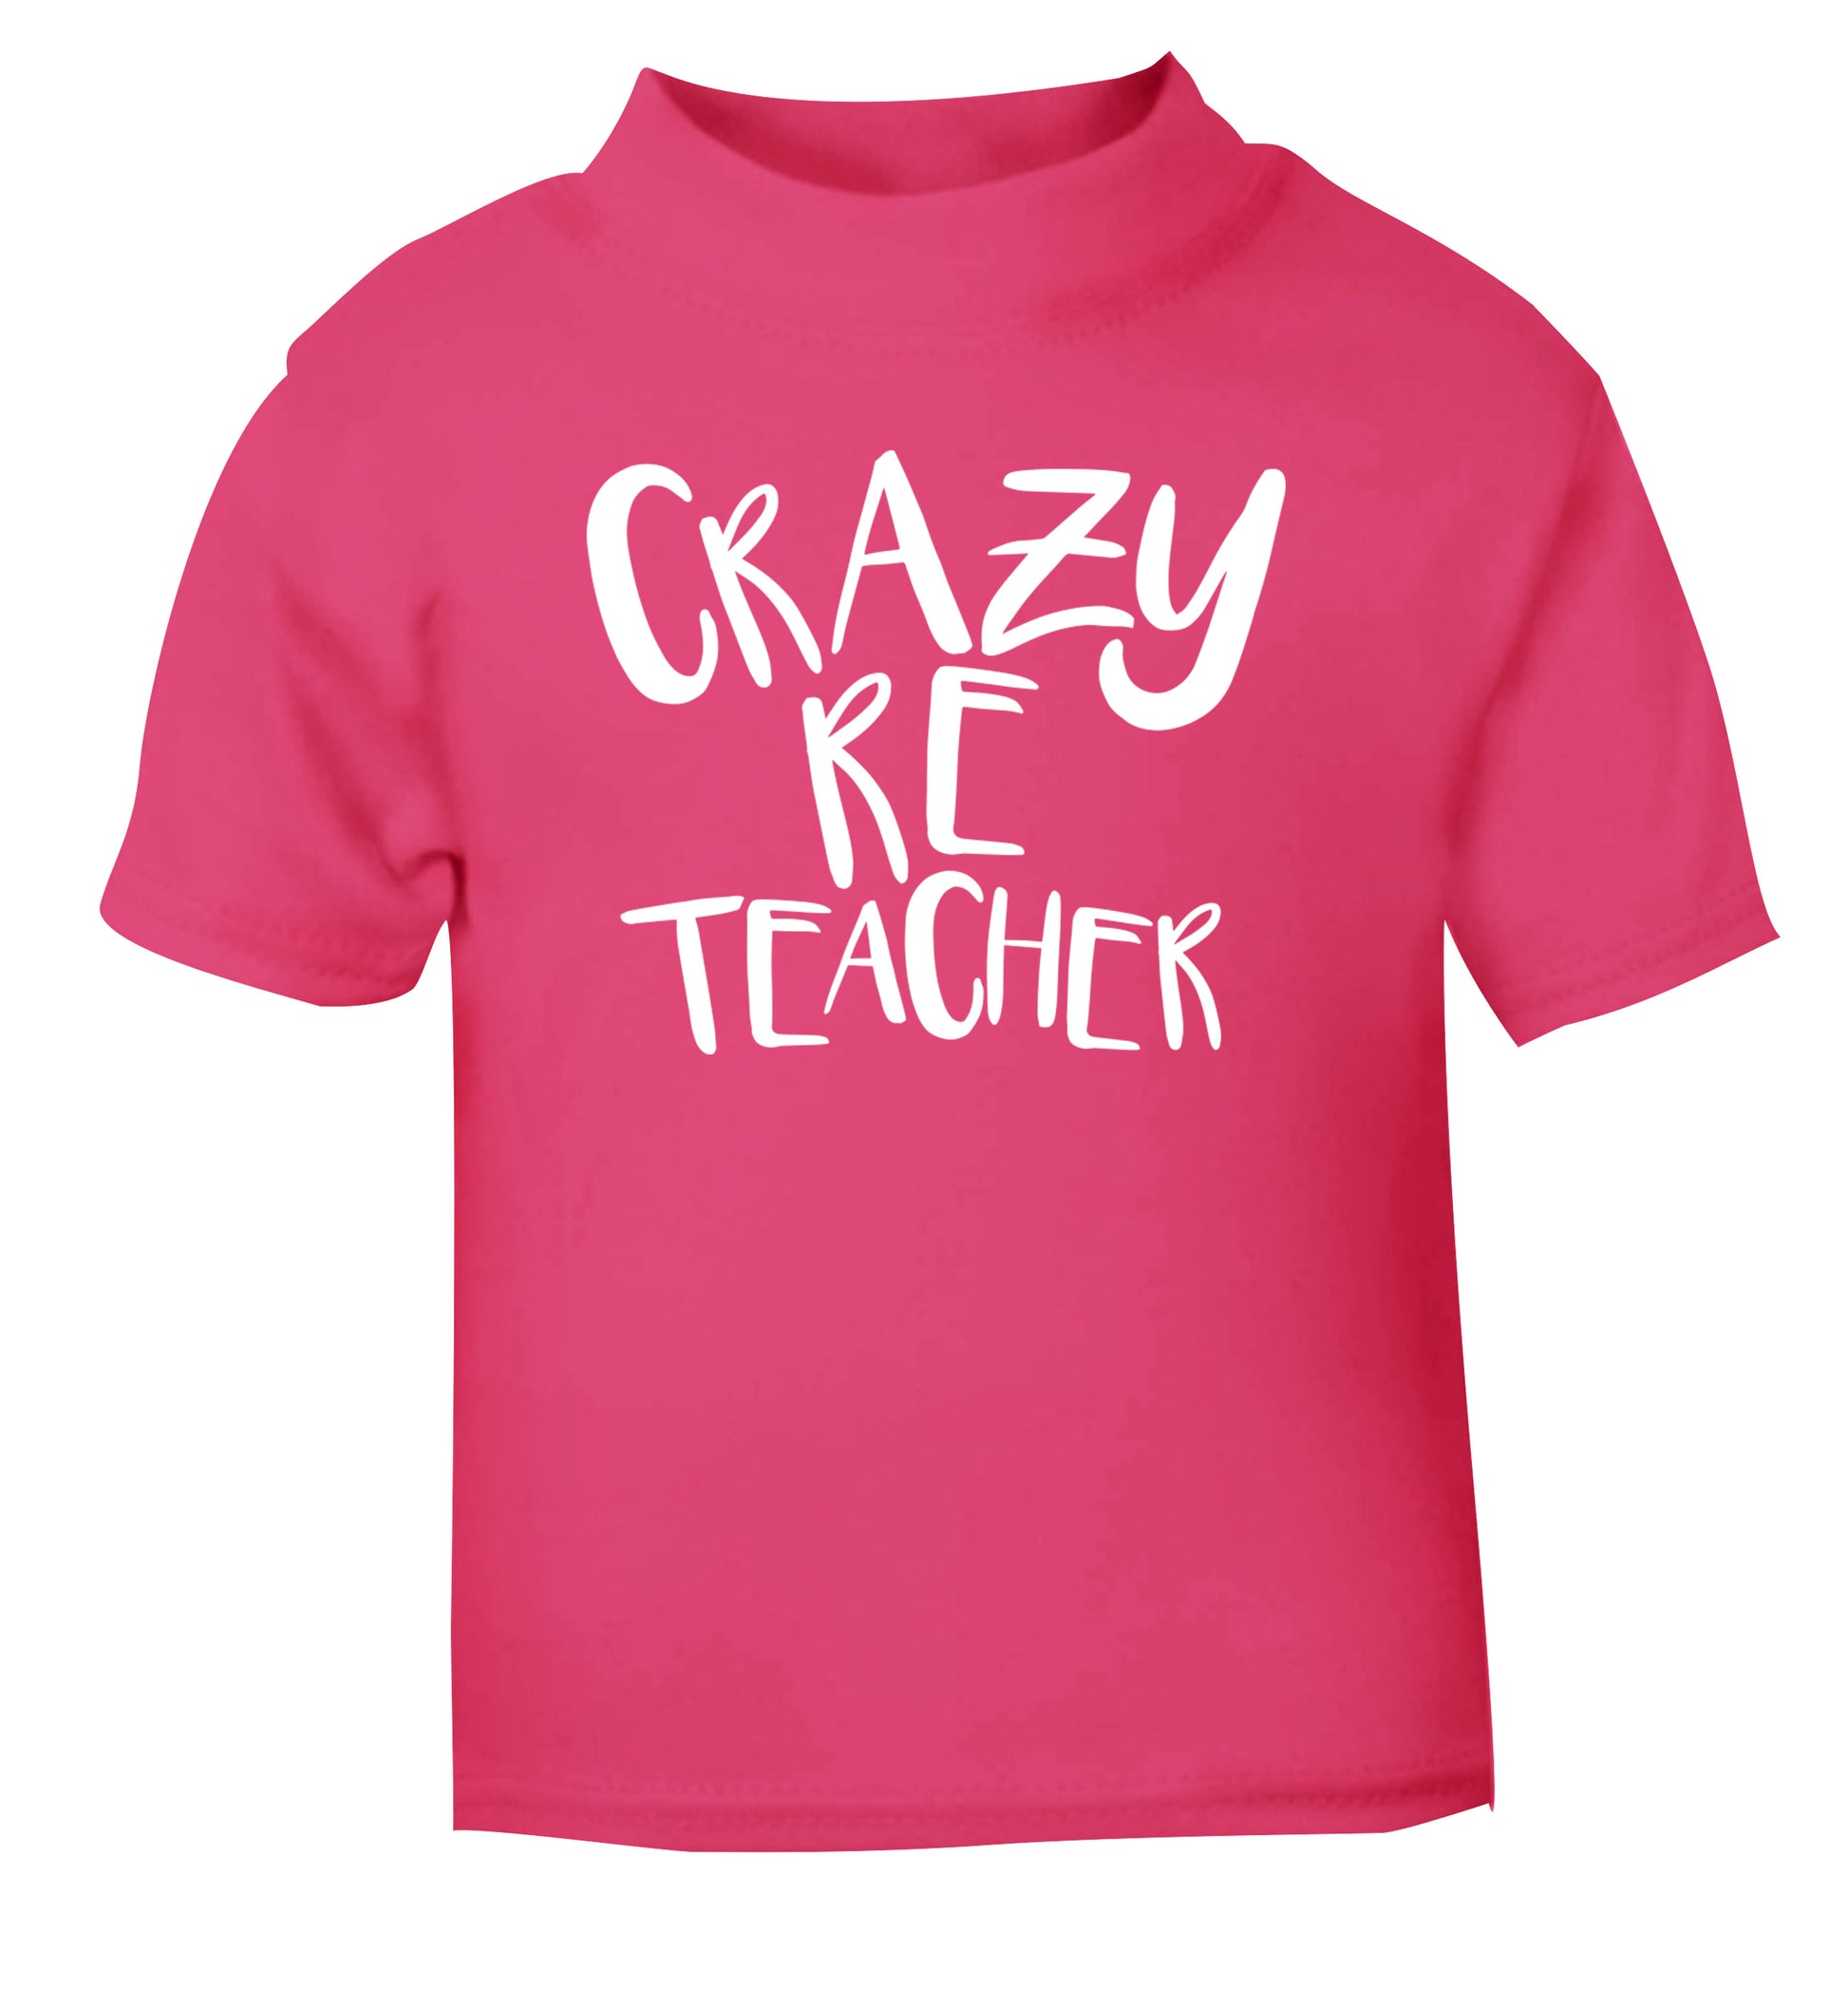 Crazy RE teacher pink Baby Toddler Tshirt 2 Years